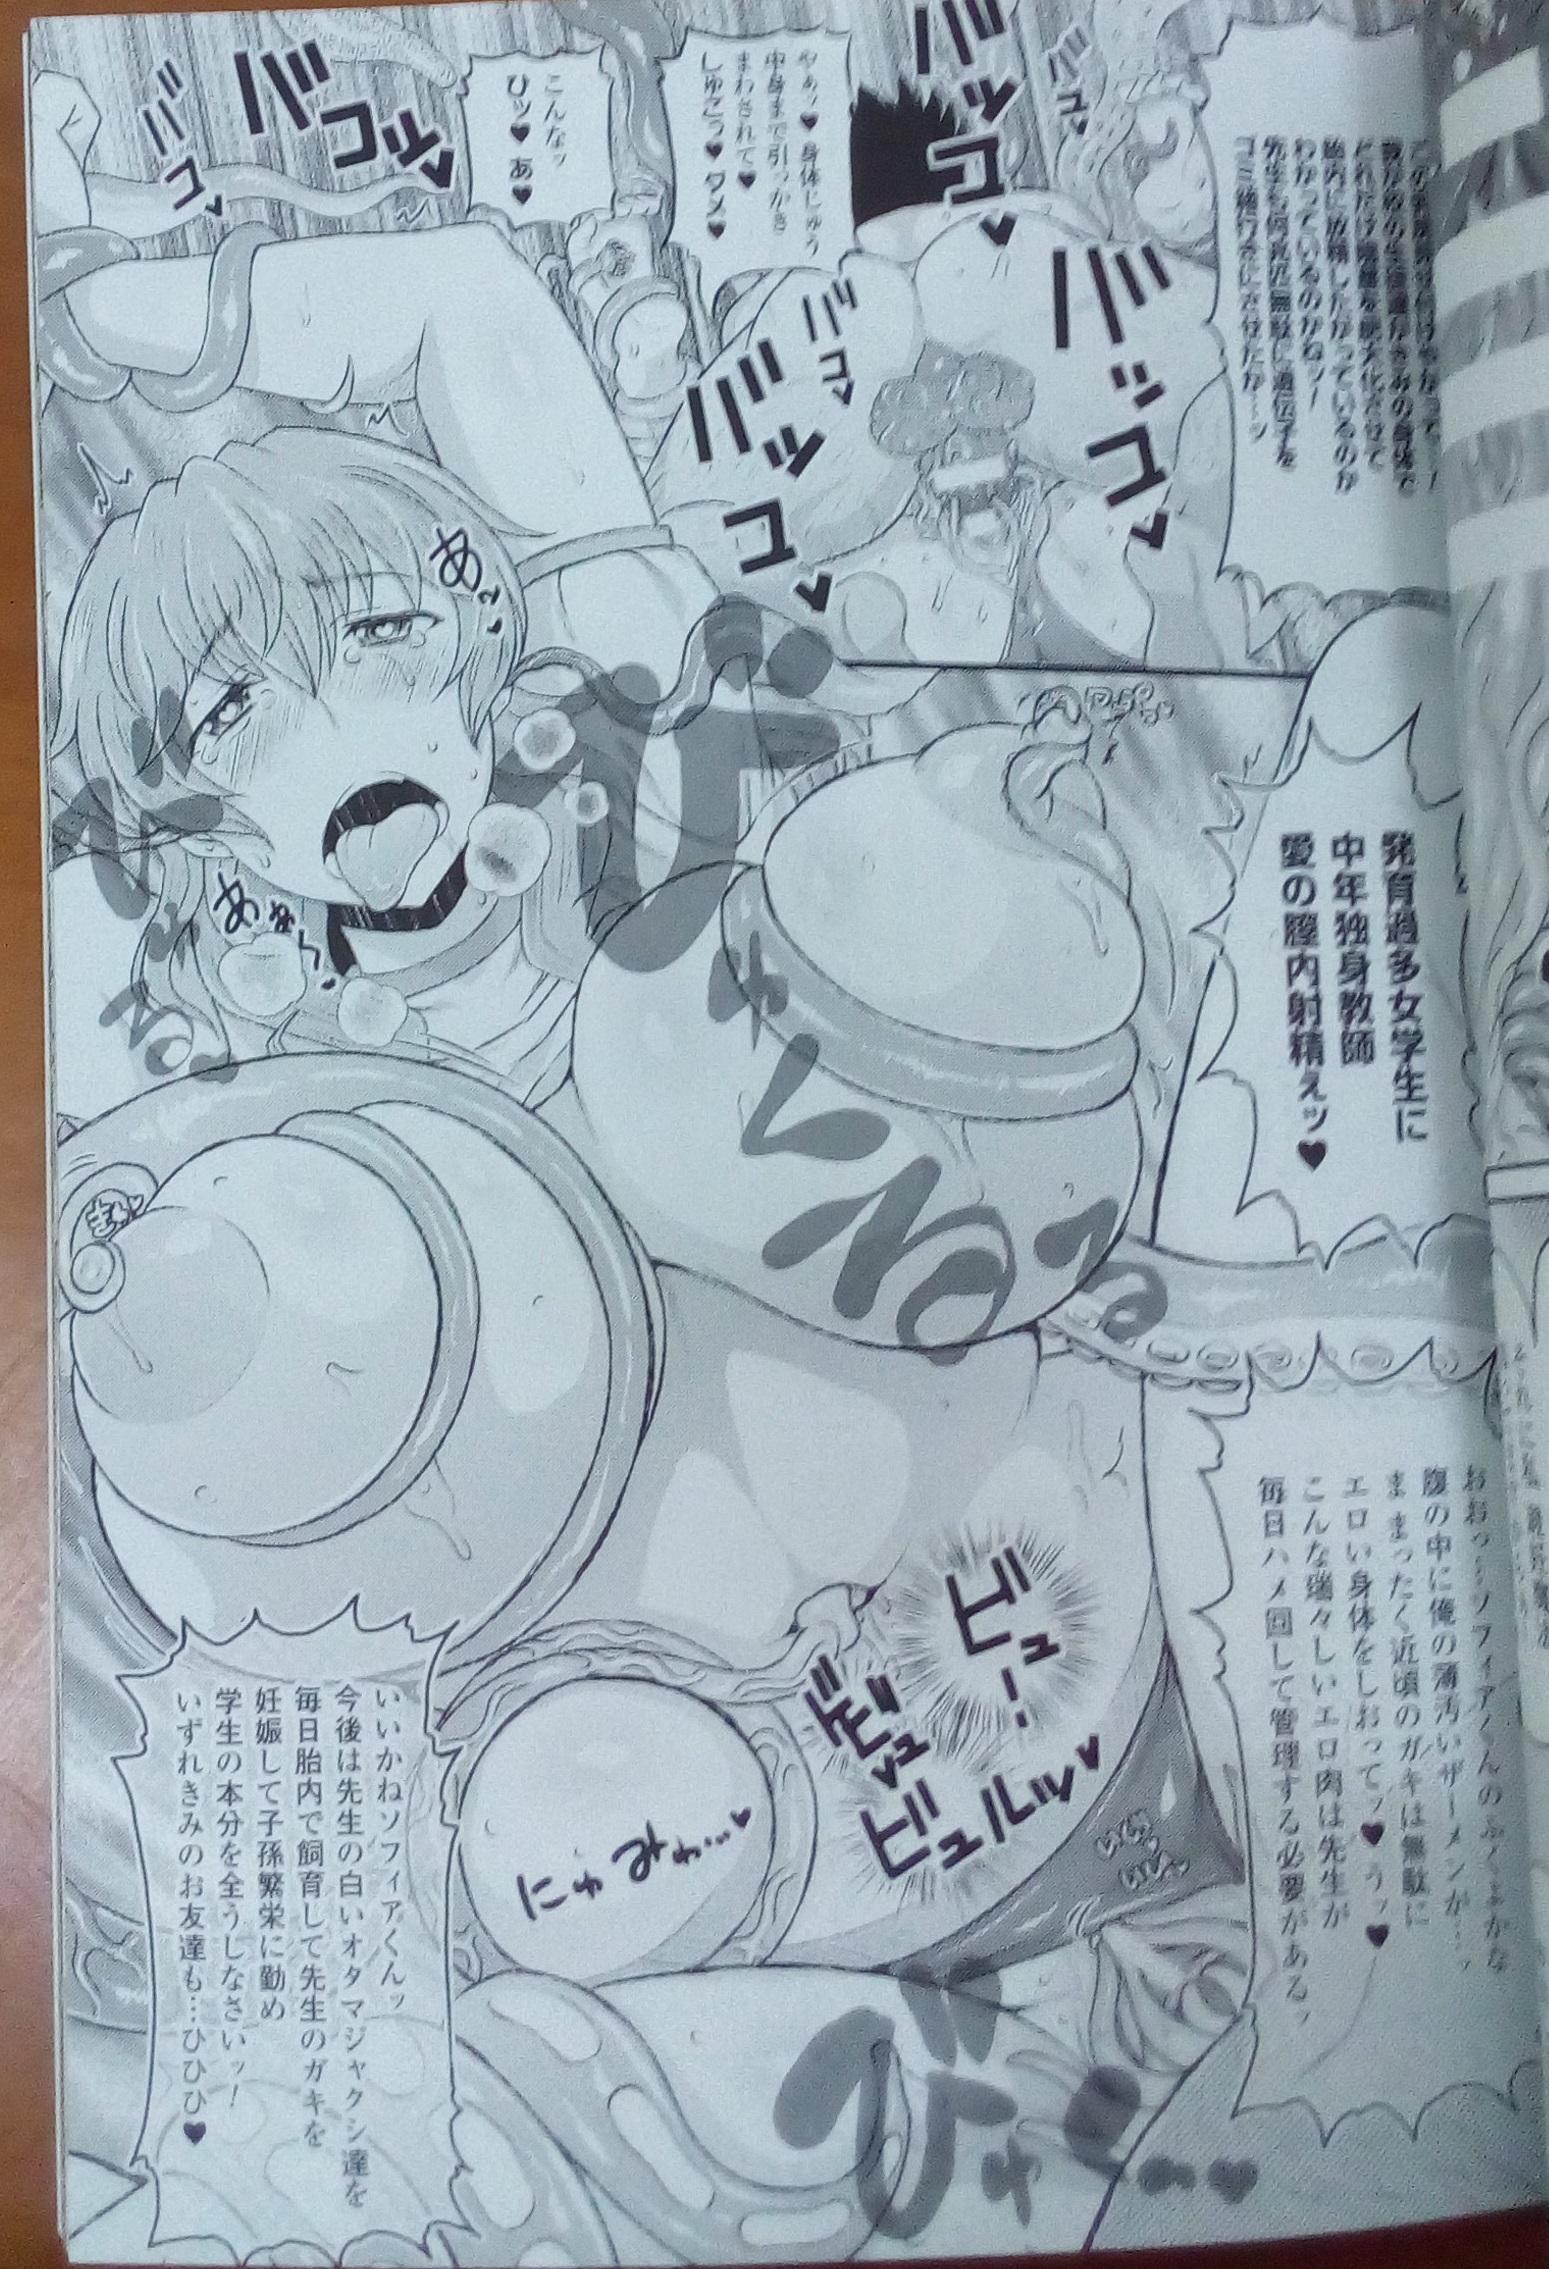 [Erect Sawaru] Shinkyoku no Grimoire III -PANDRA saga 2nd story-  Append book [Photoed] 17